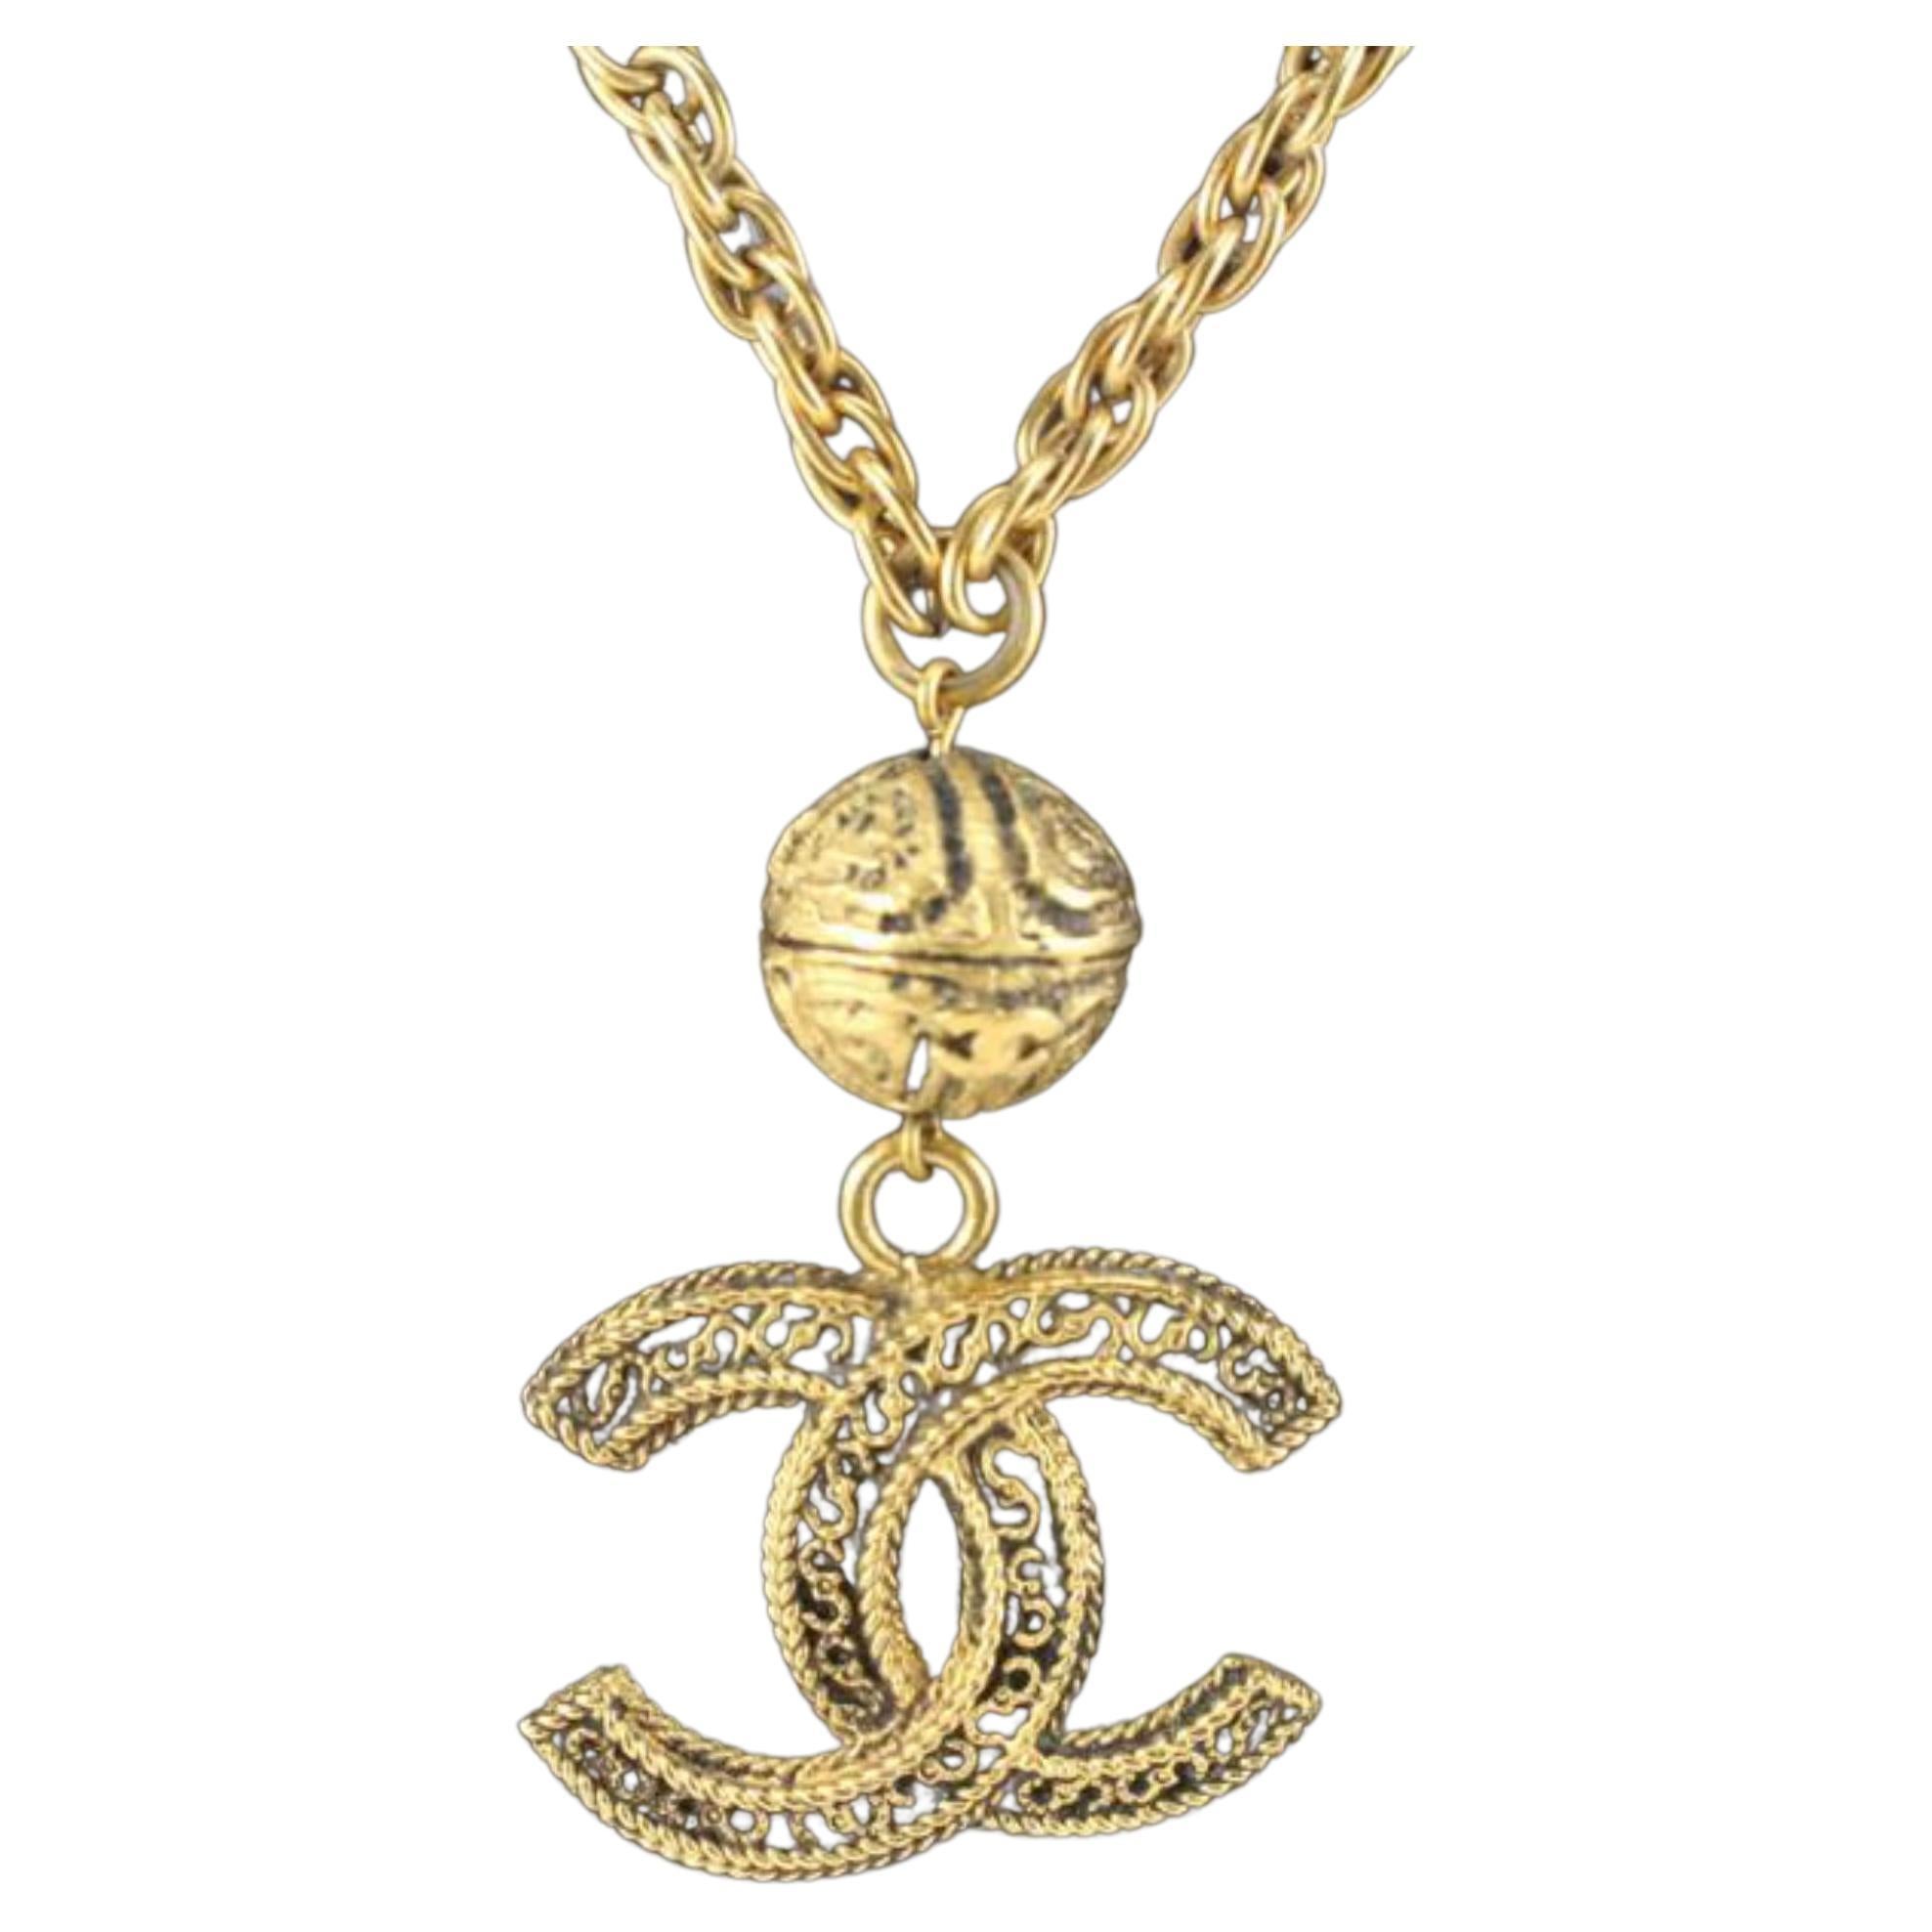 Chanel Rare 24k Gold Plated Filigree Ball CC Chain Necklace 36cc721s